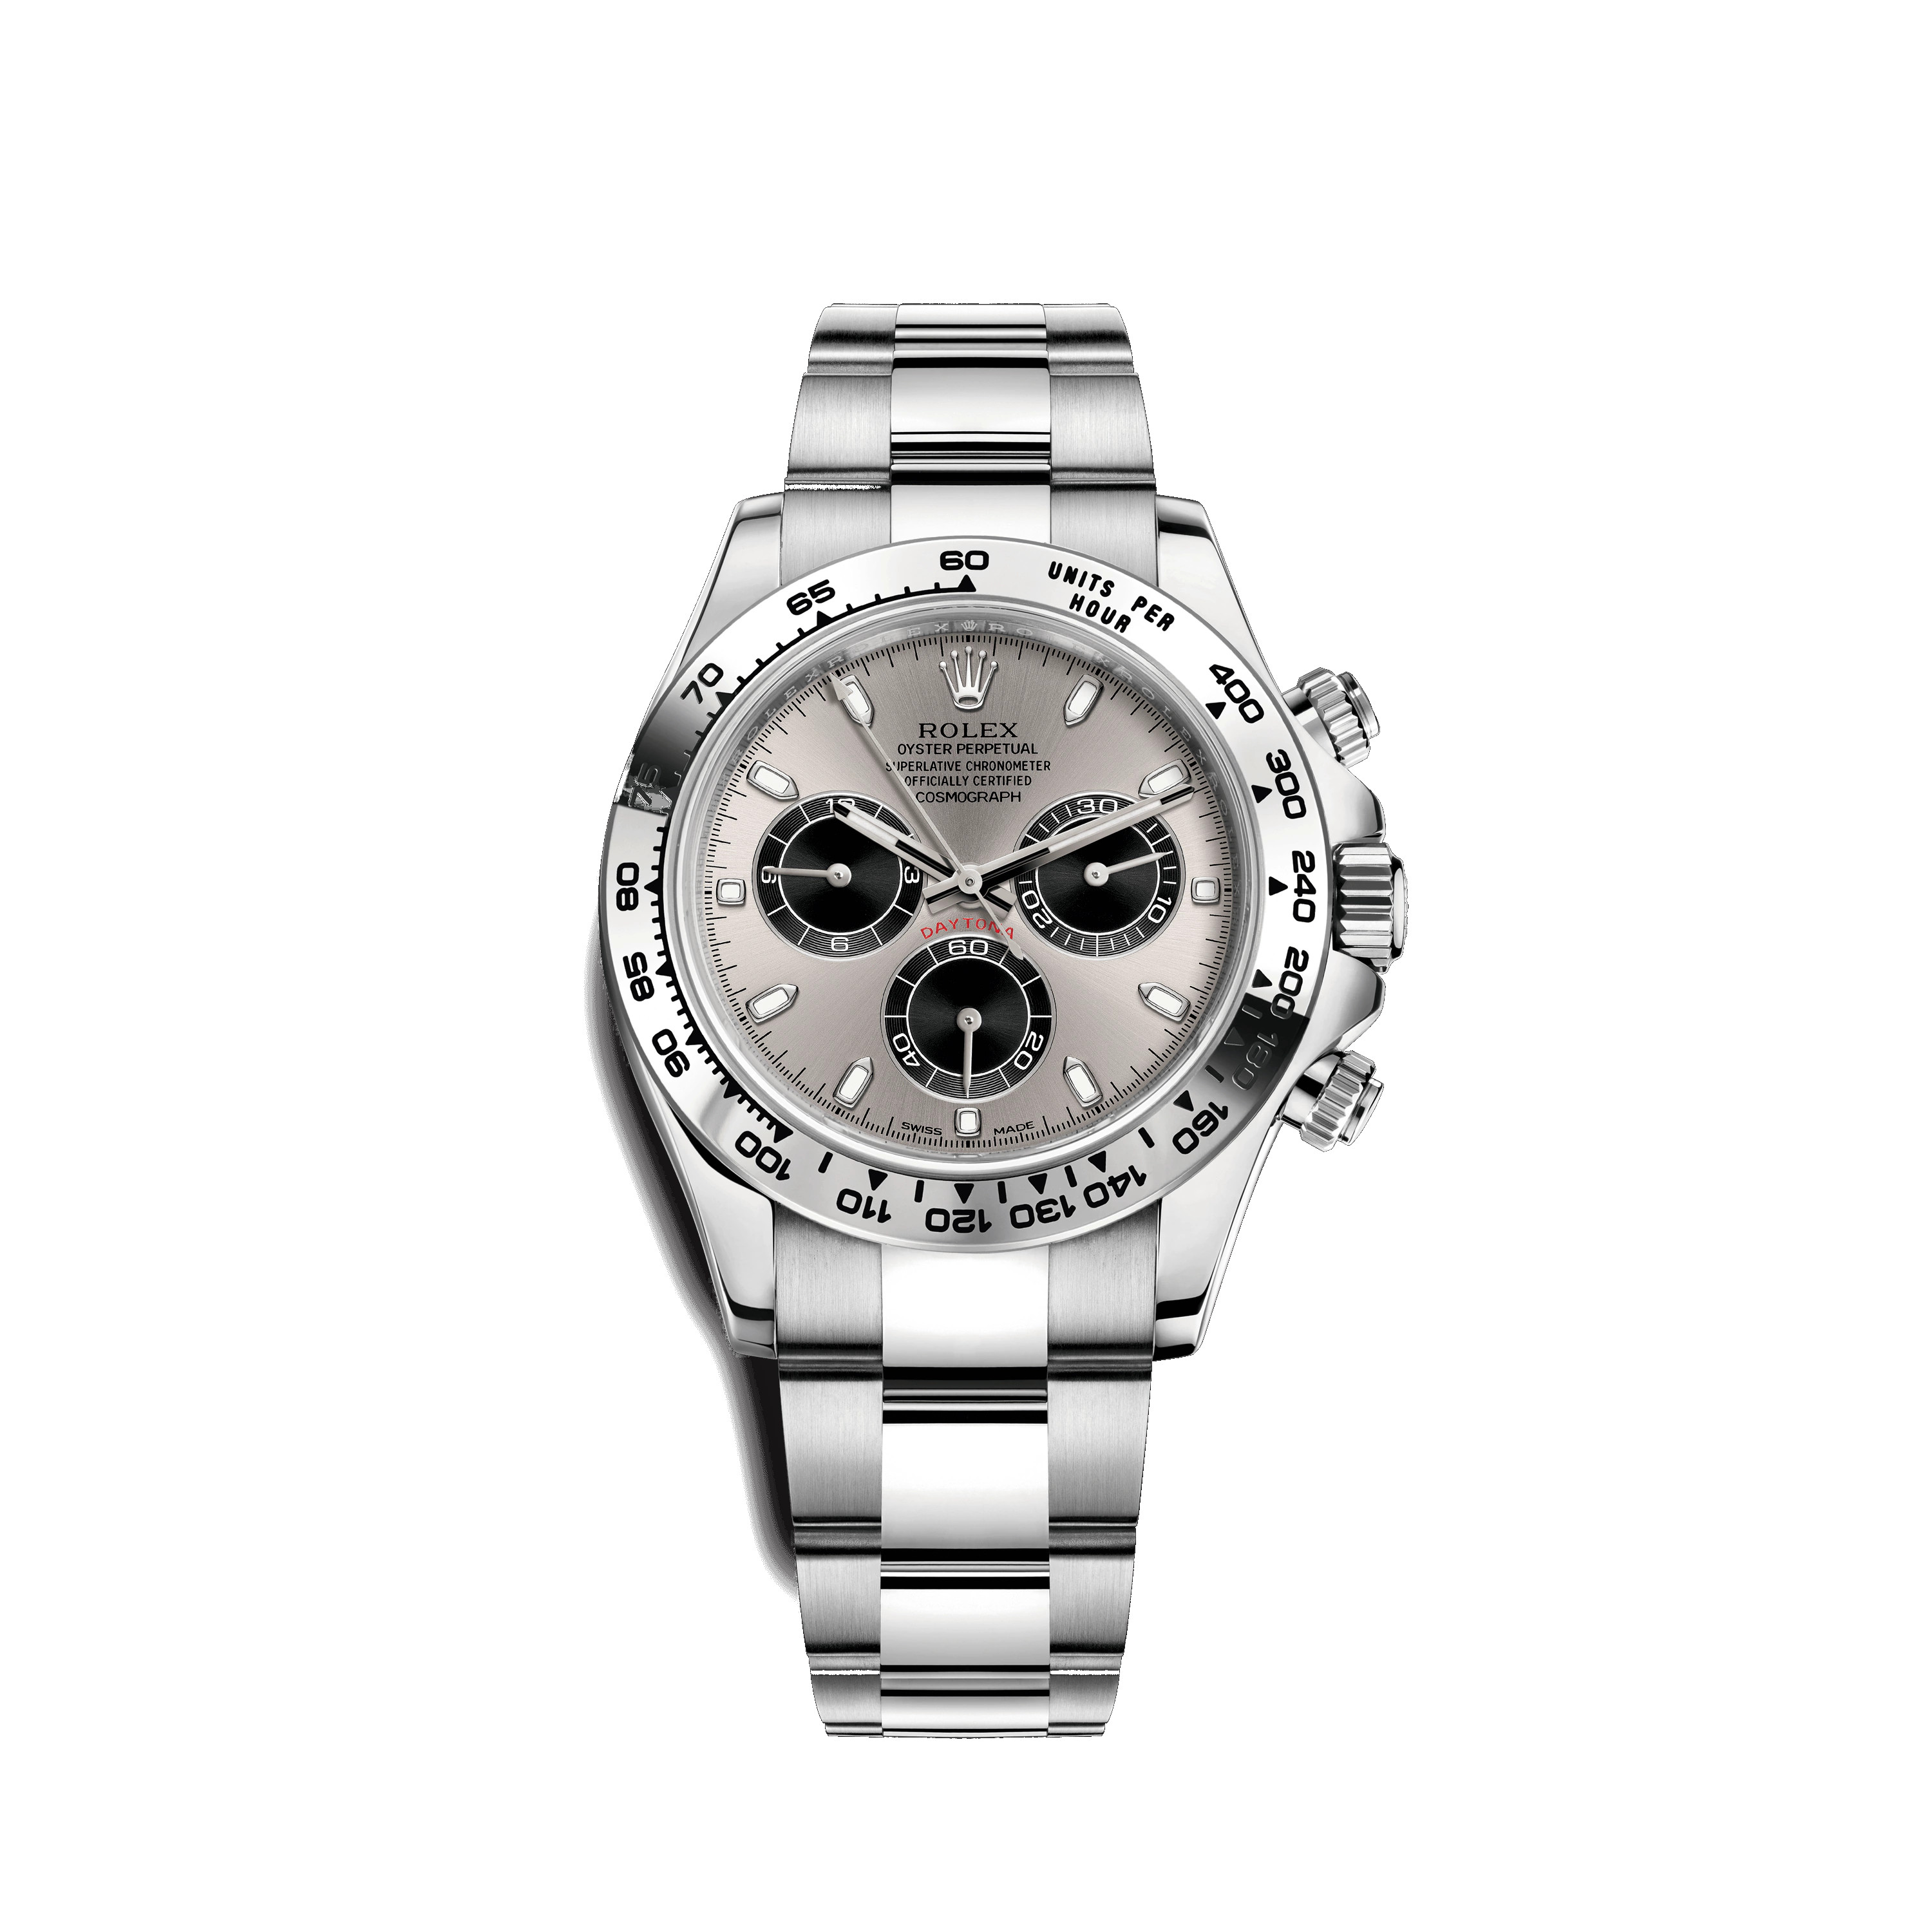 Cosmograph Daytona 116509 White Gold Watch (Steel and Black)